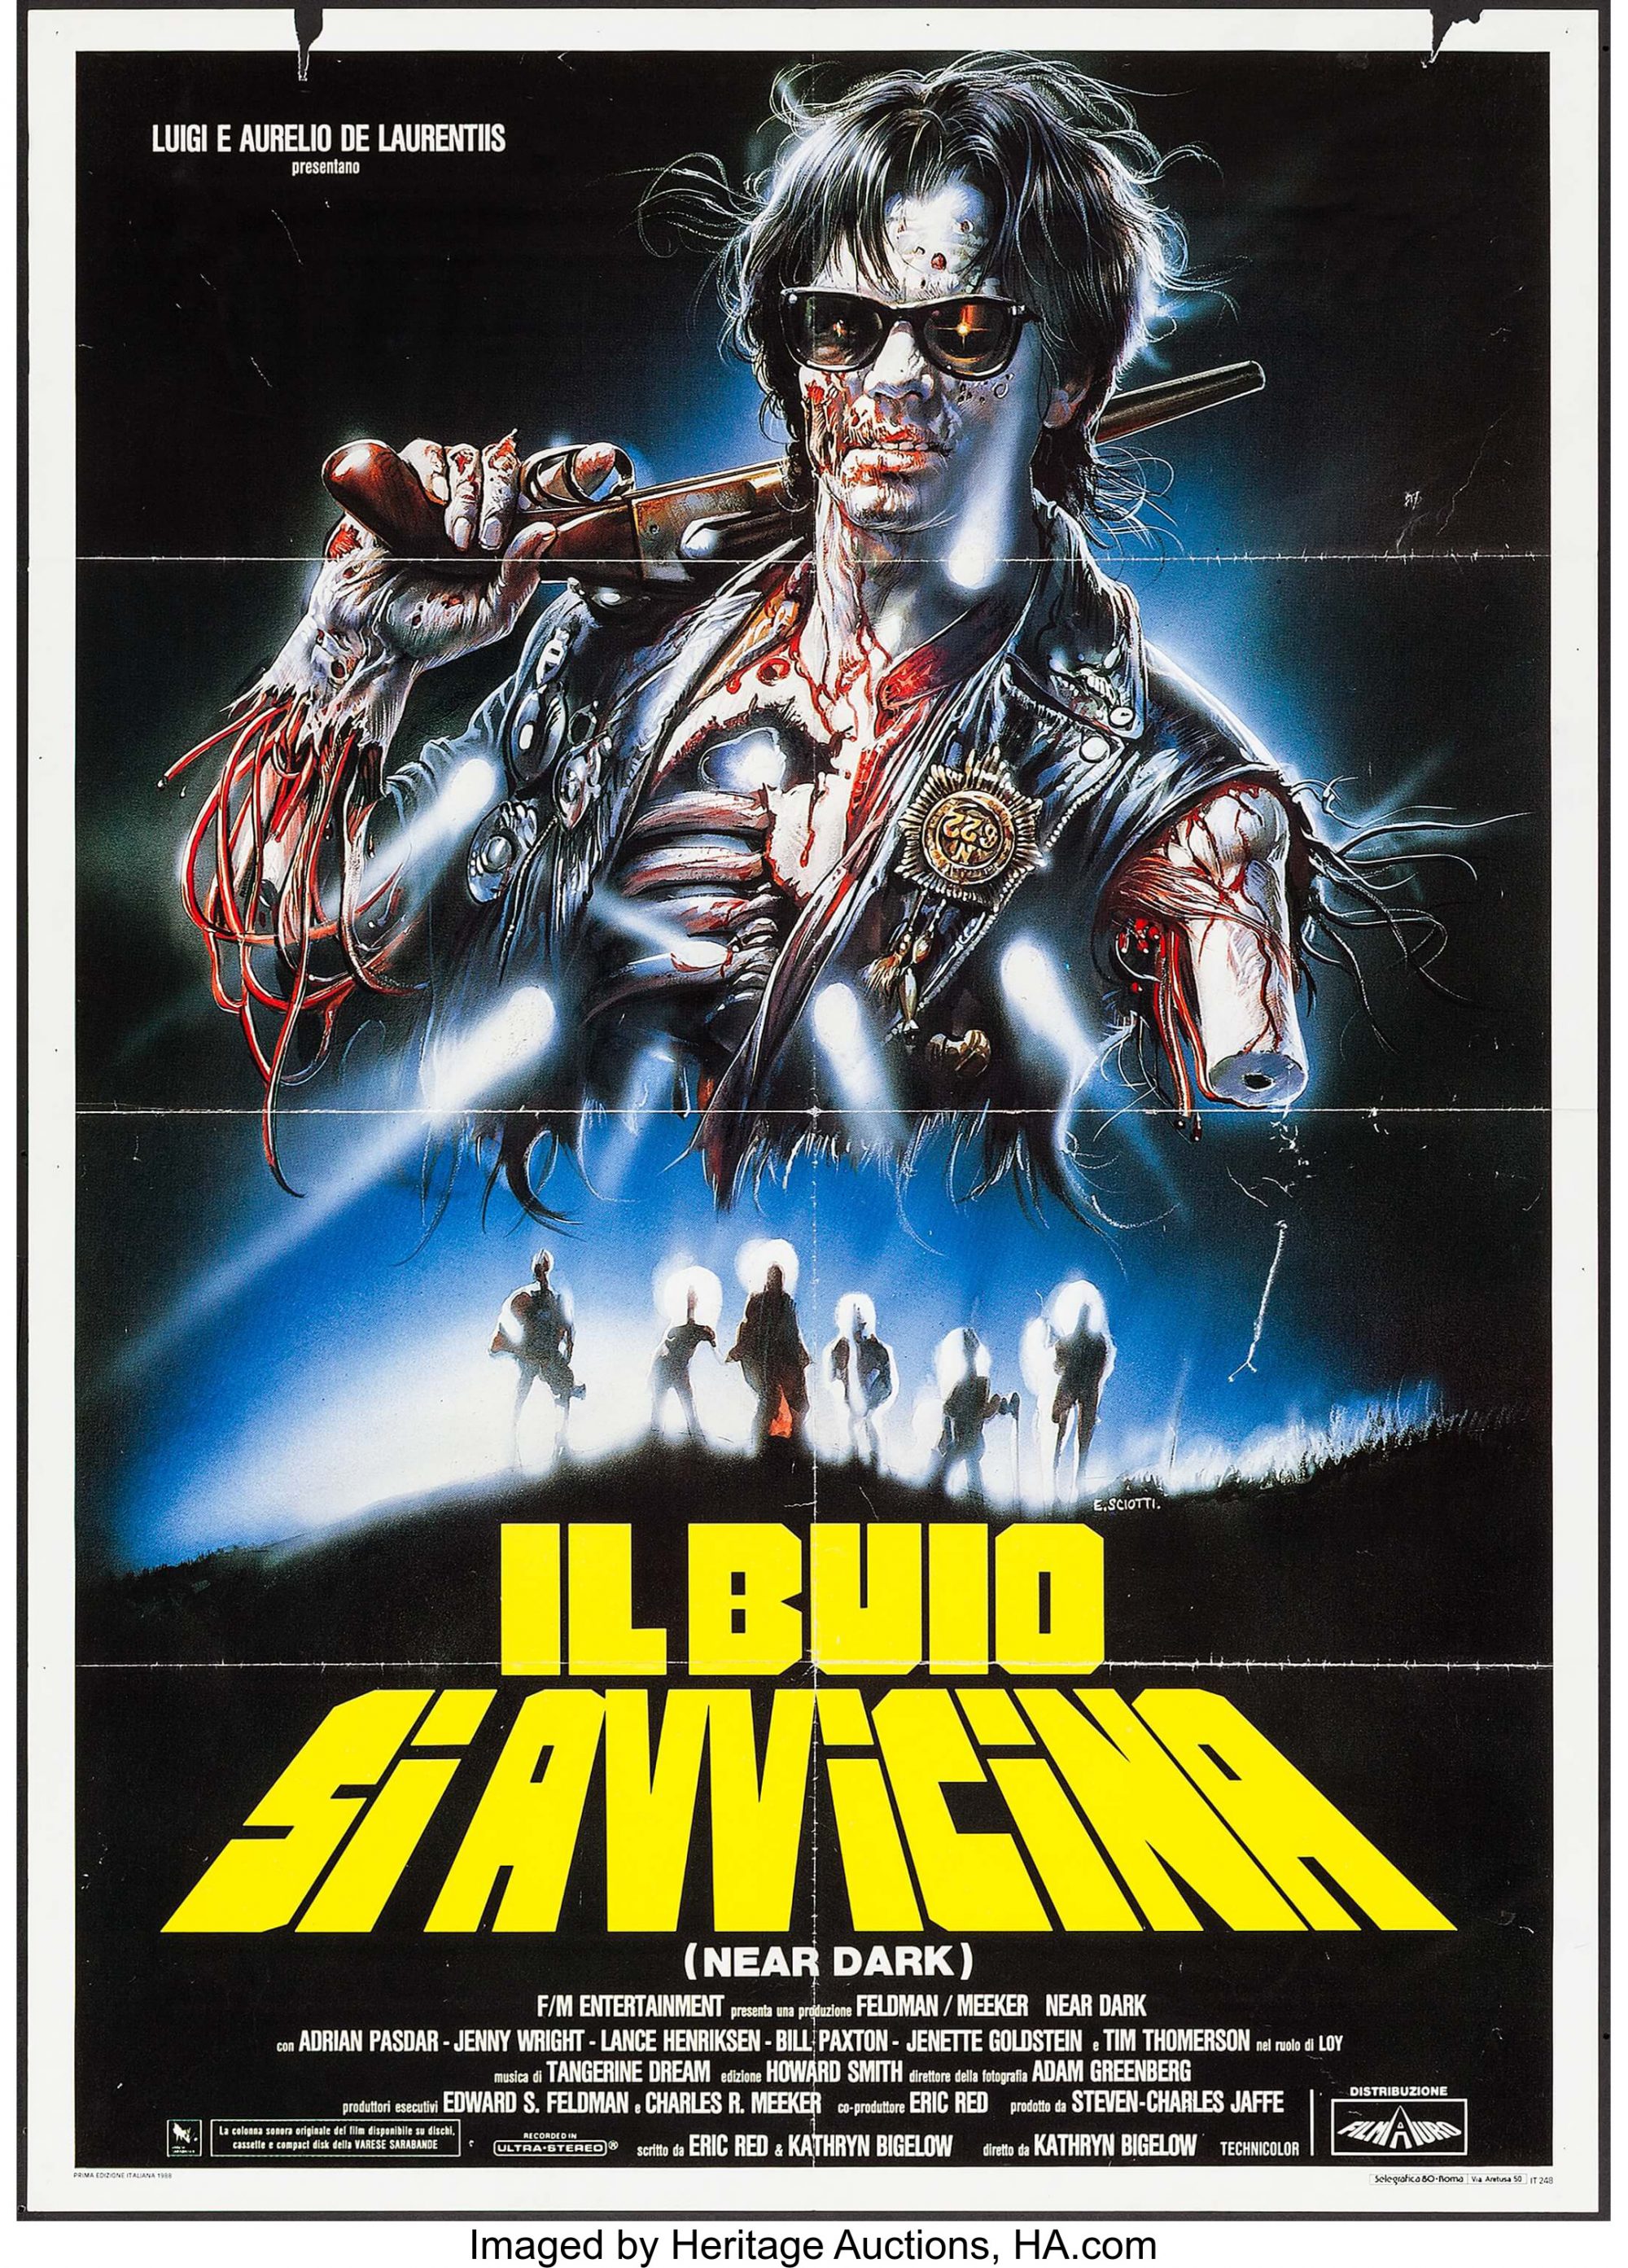 Near Dark (1988) Italian movie poster